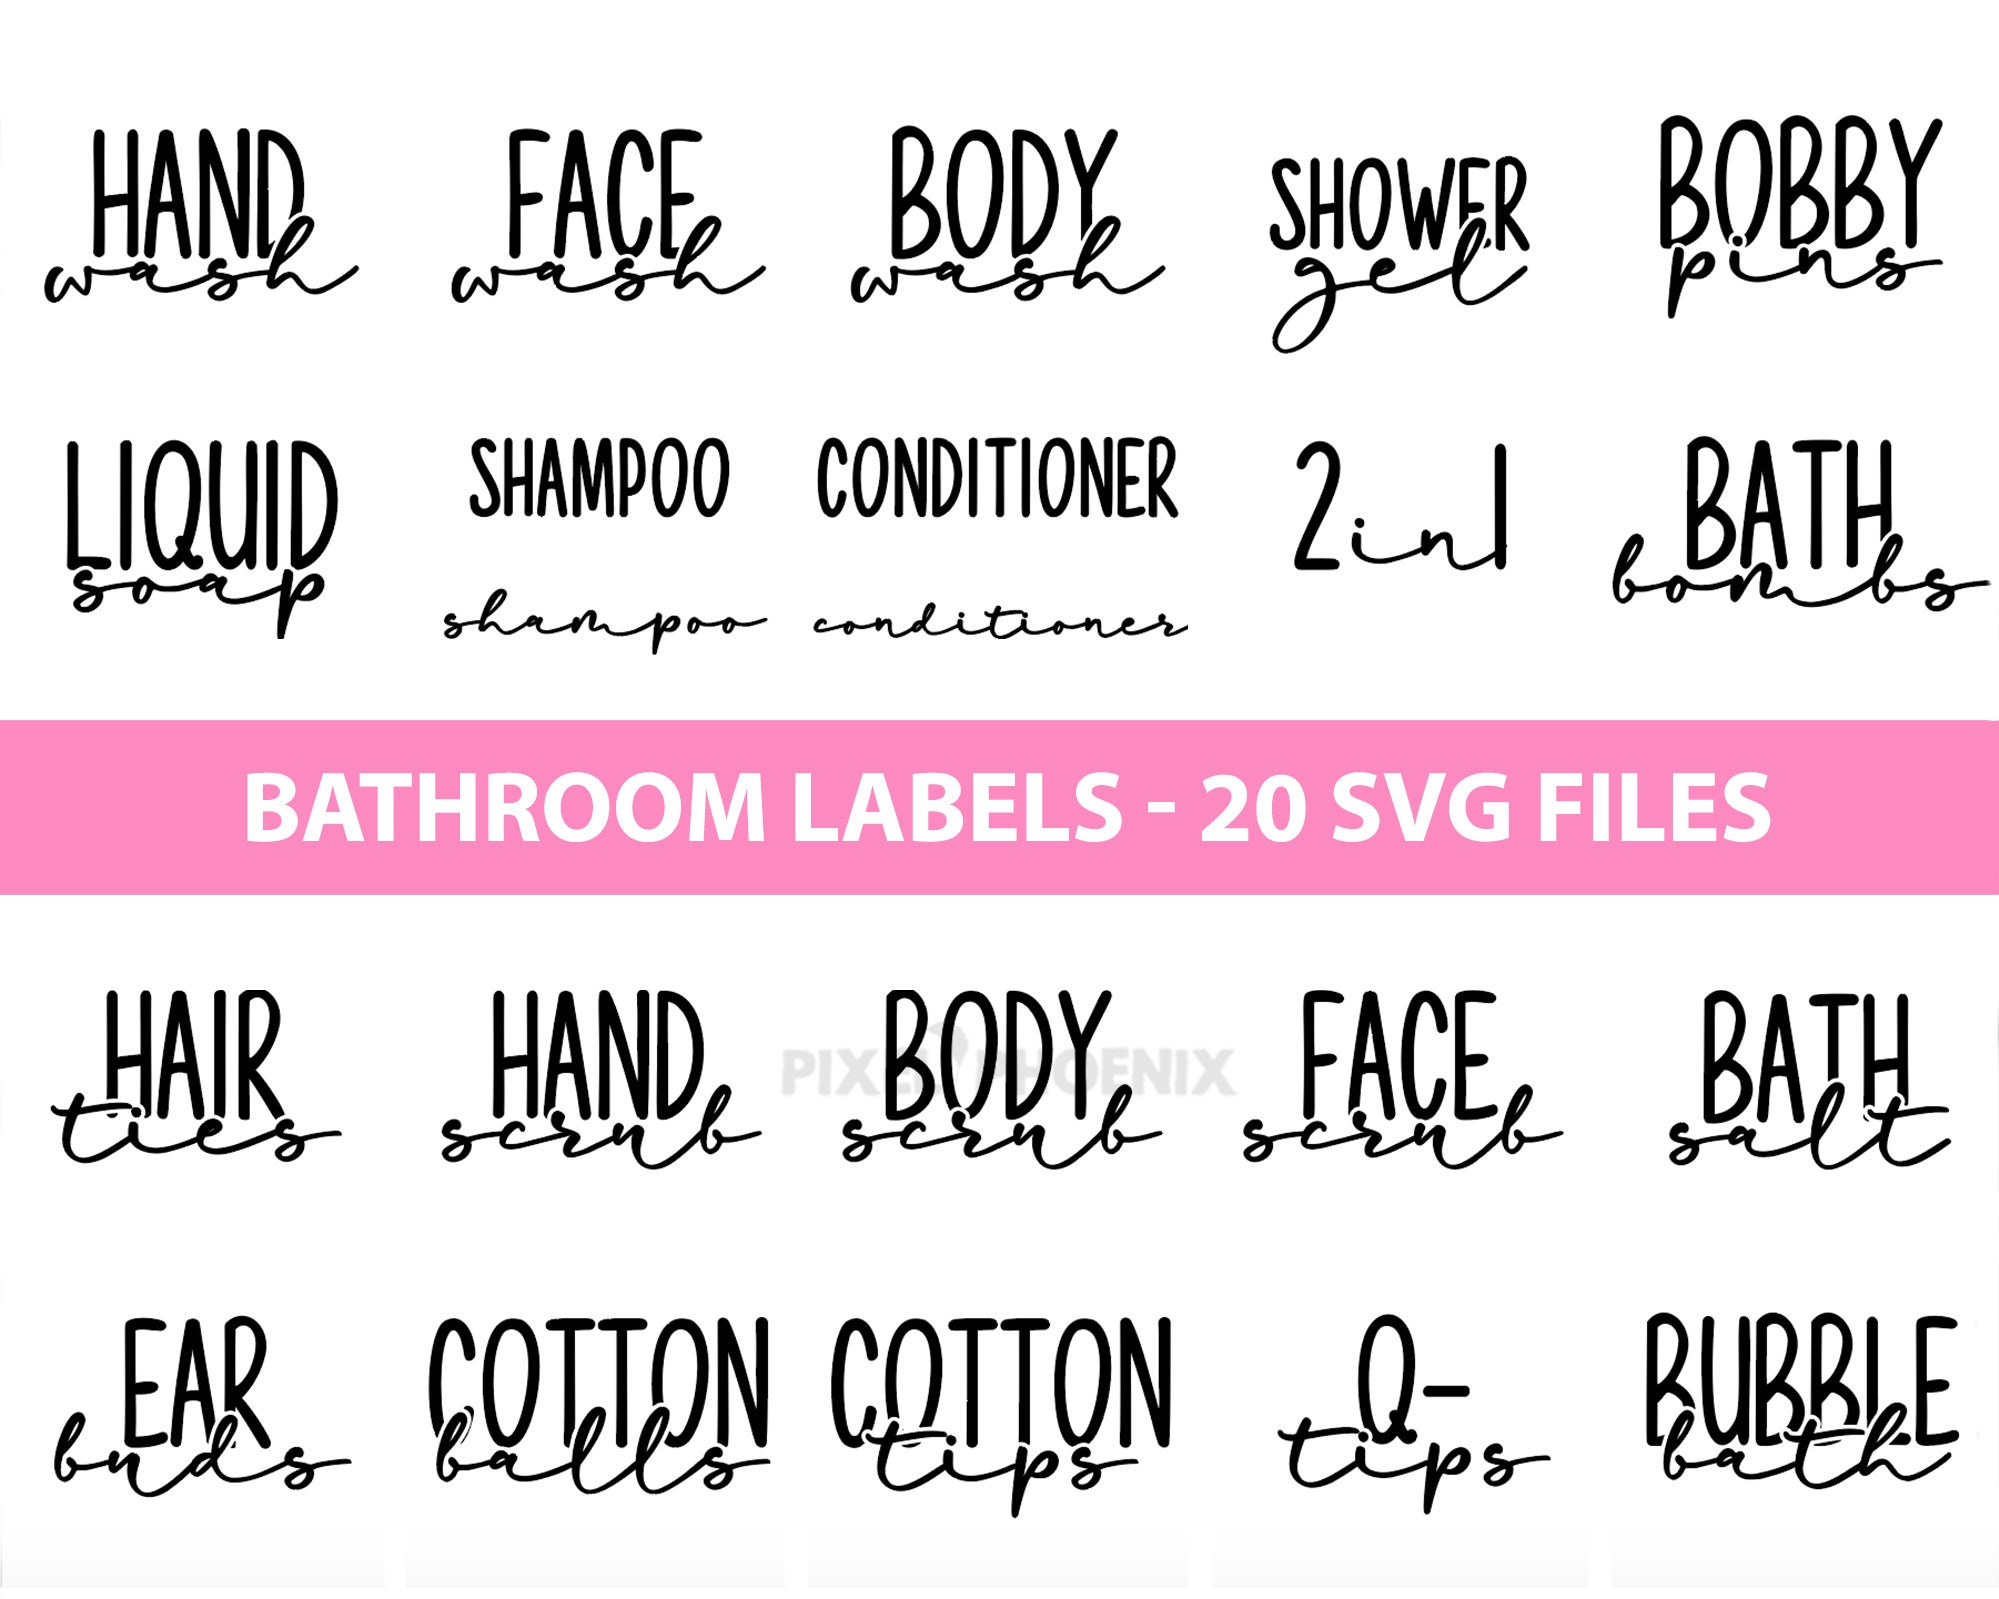 Bathroom Labels / Bathroom Label/ Labels / Canva Labels Template